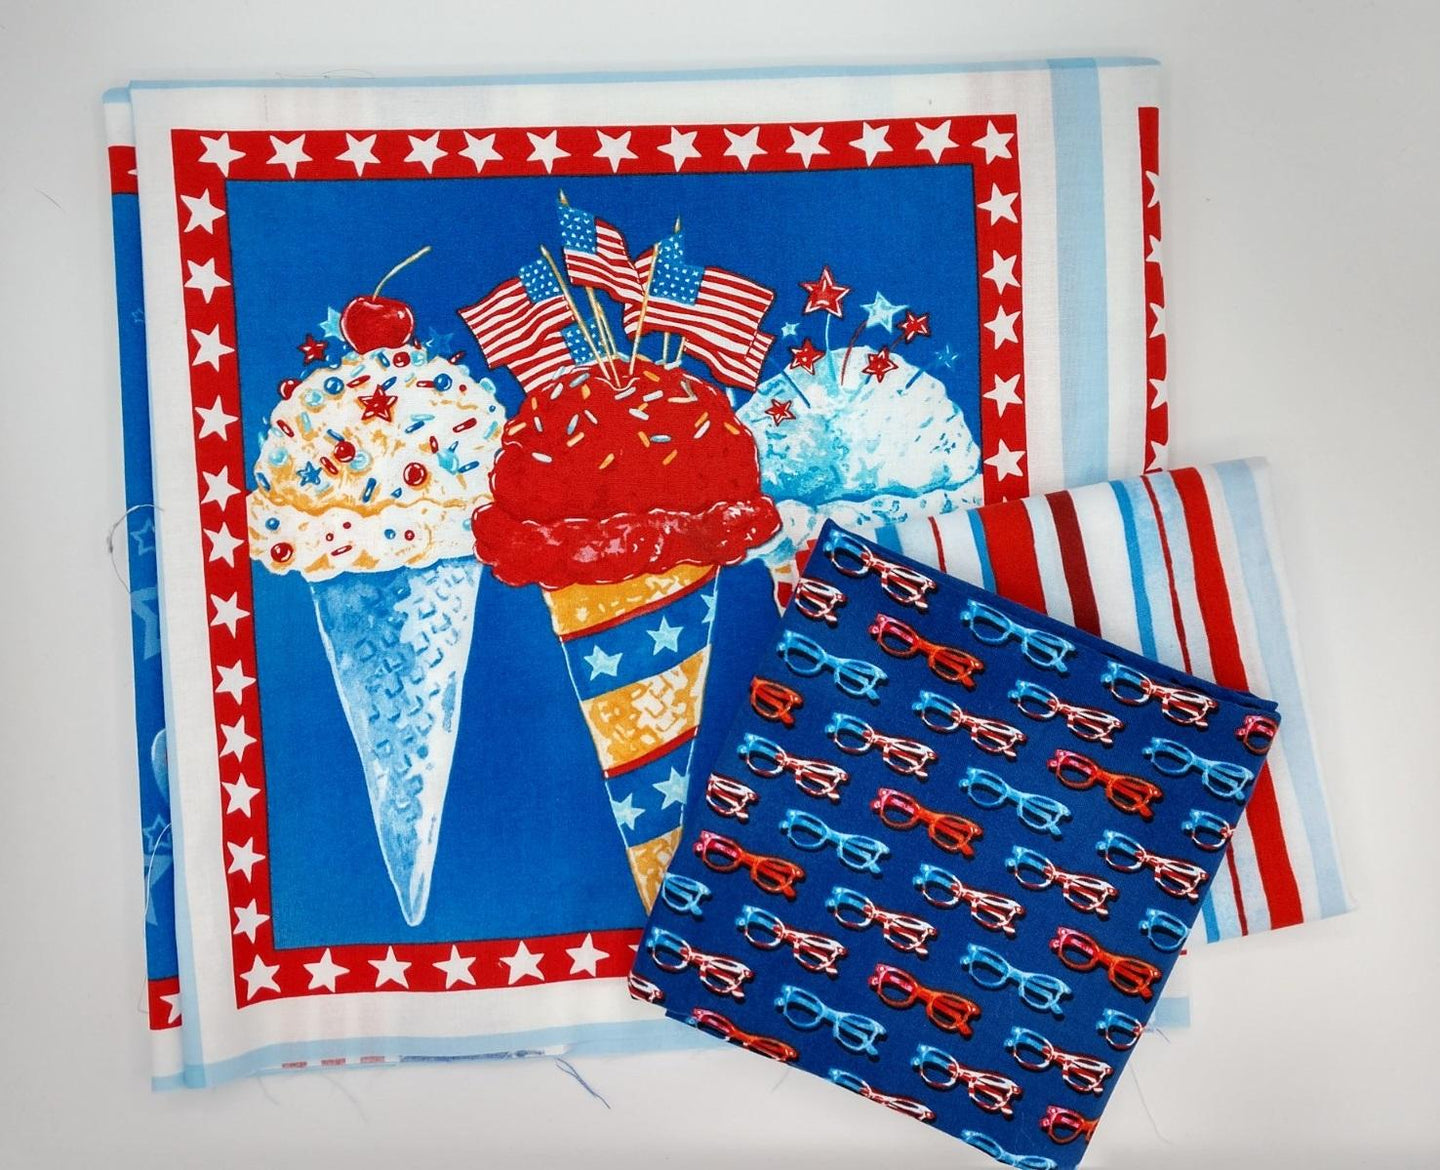 Star Spangled Fabric Kit